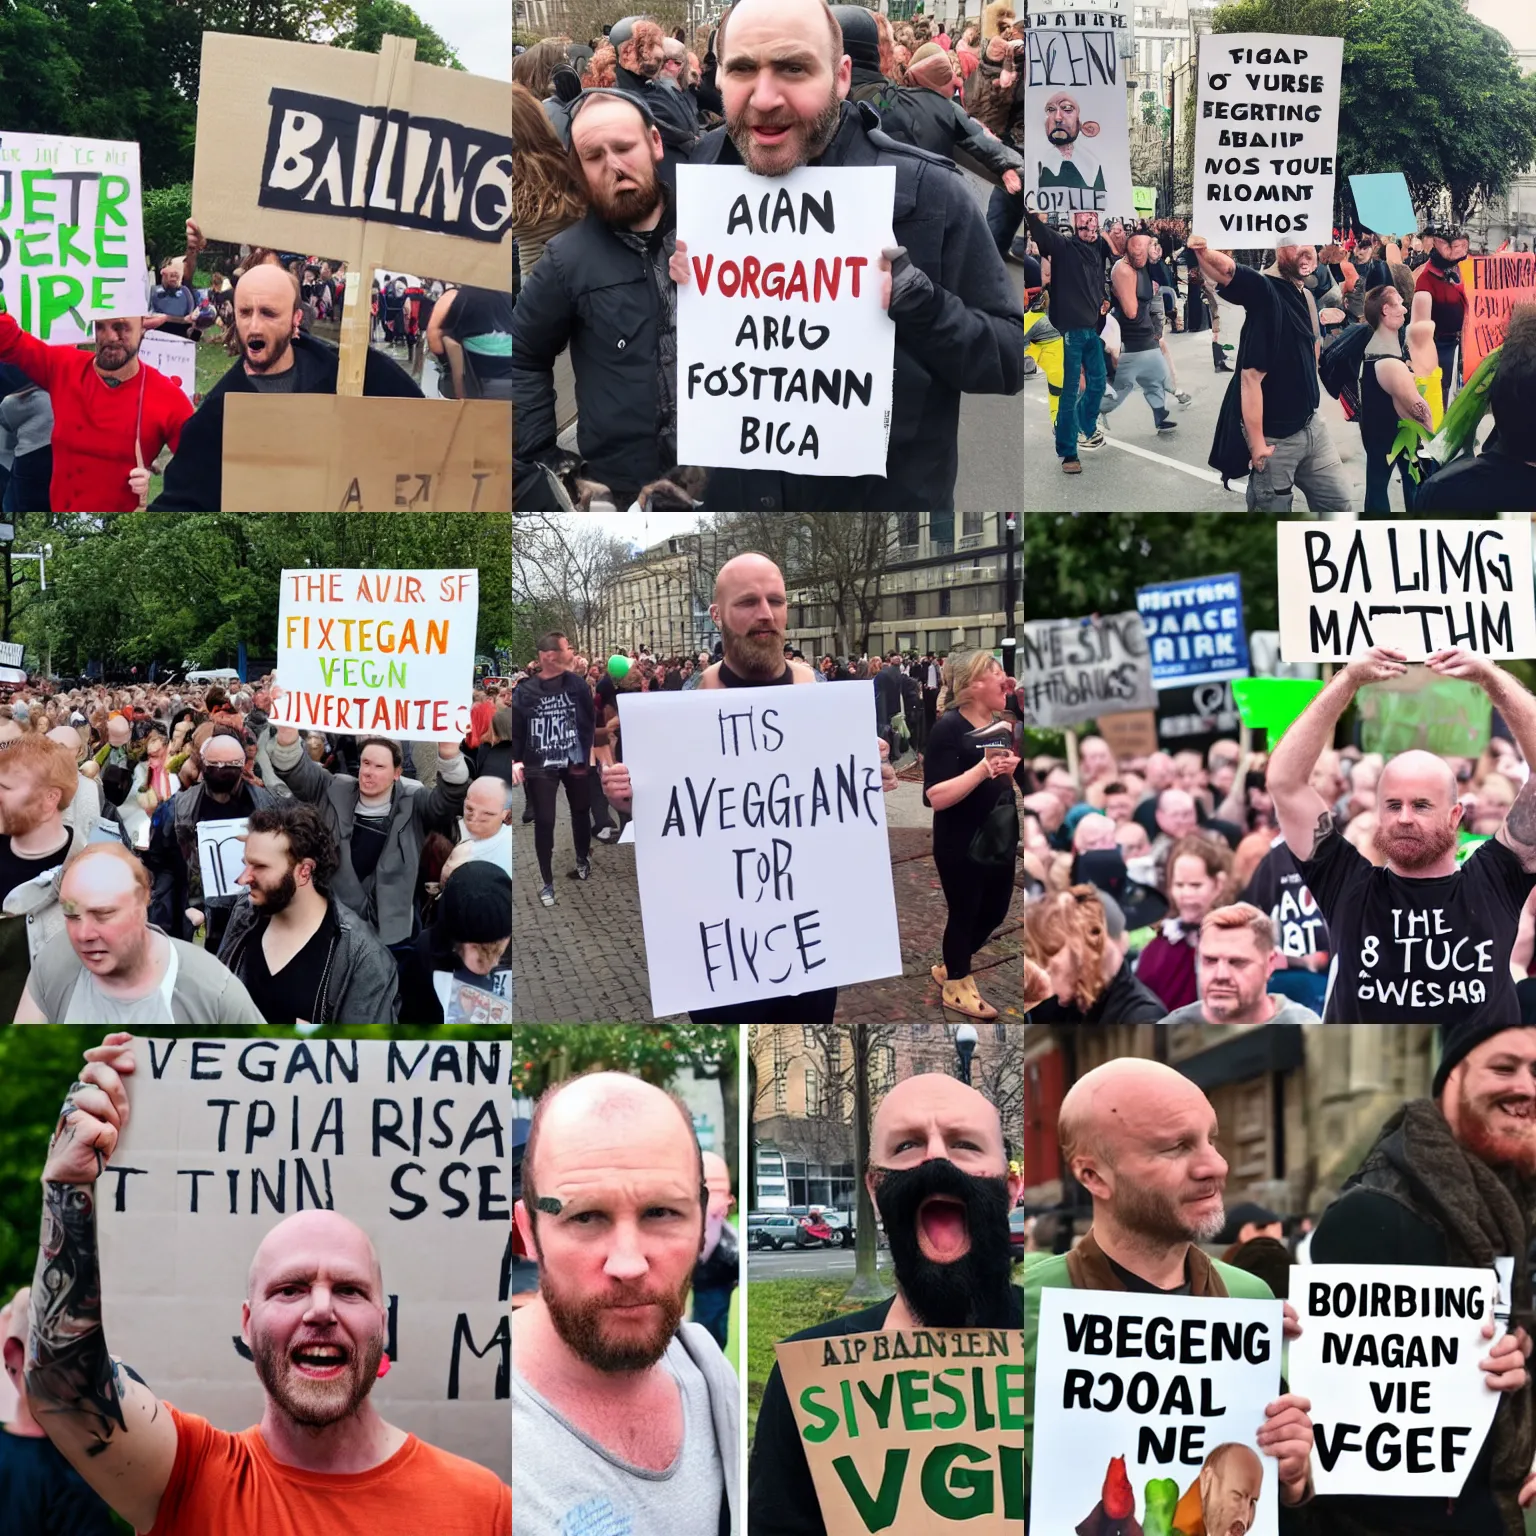 Prompt: balding vegan scotsman protest